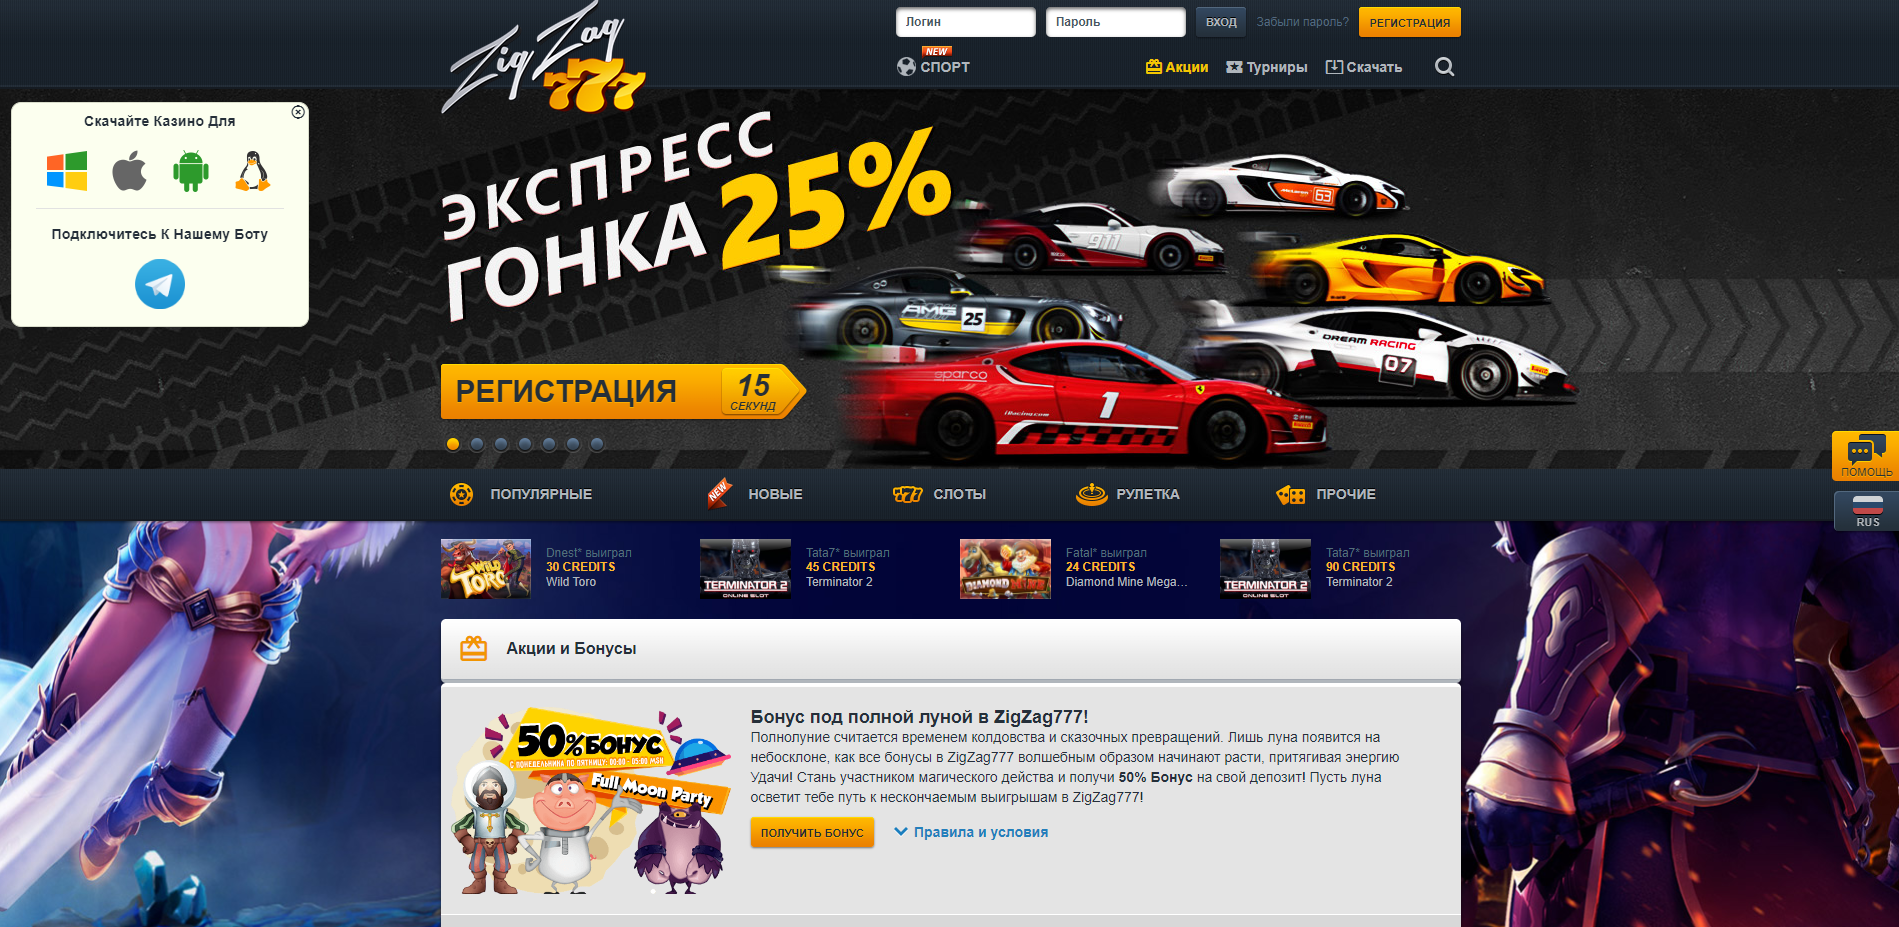 Казино онлайн зигзаг 777 новое зеркало казино с пополнением на вебмани